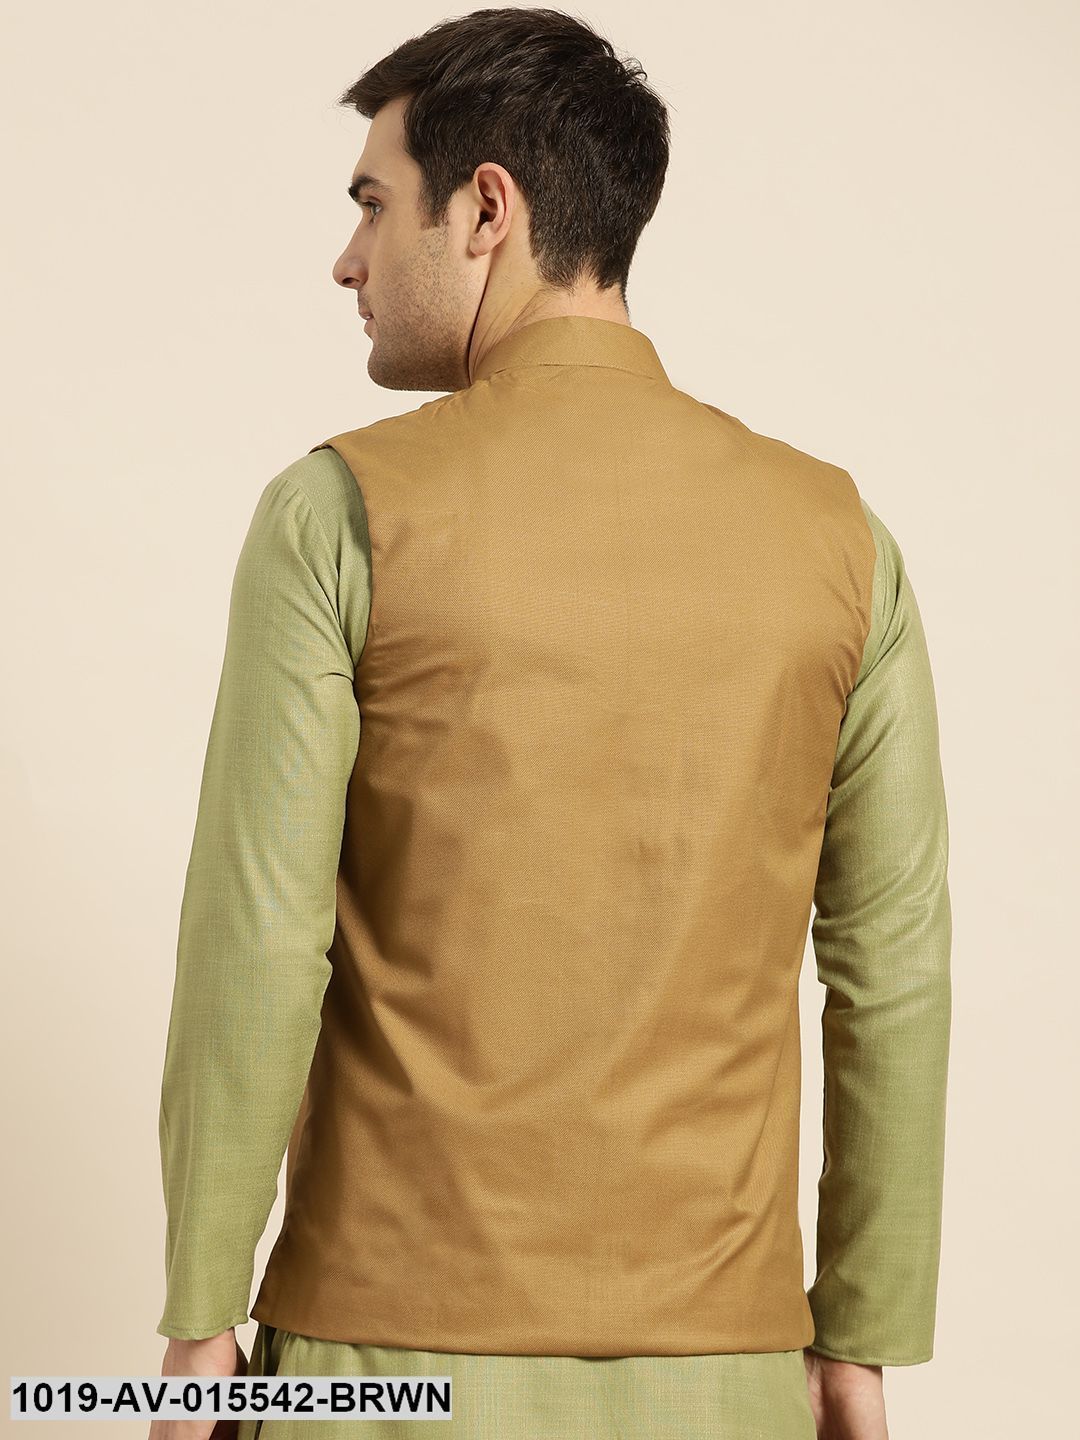 Men's Cotton Blend Brown Solid Nehru Jacket - Final Clearance Sale